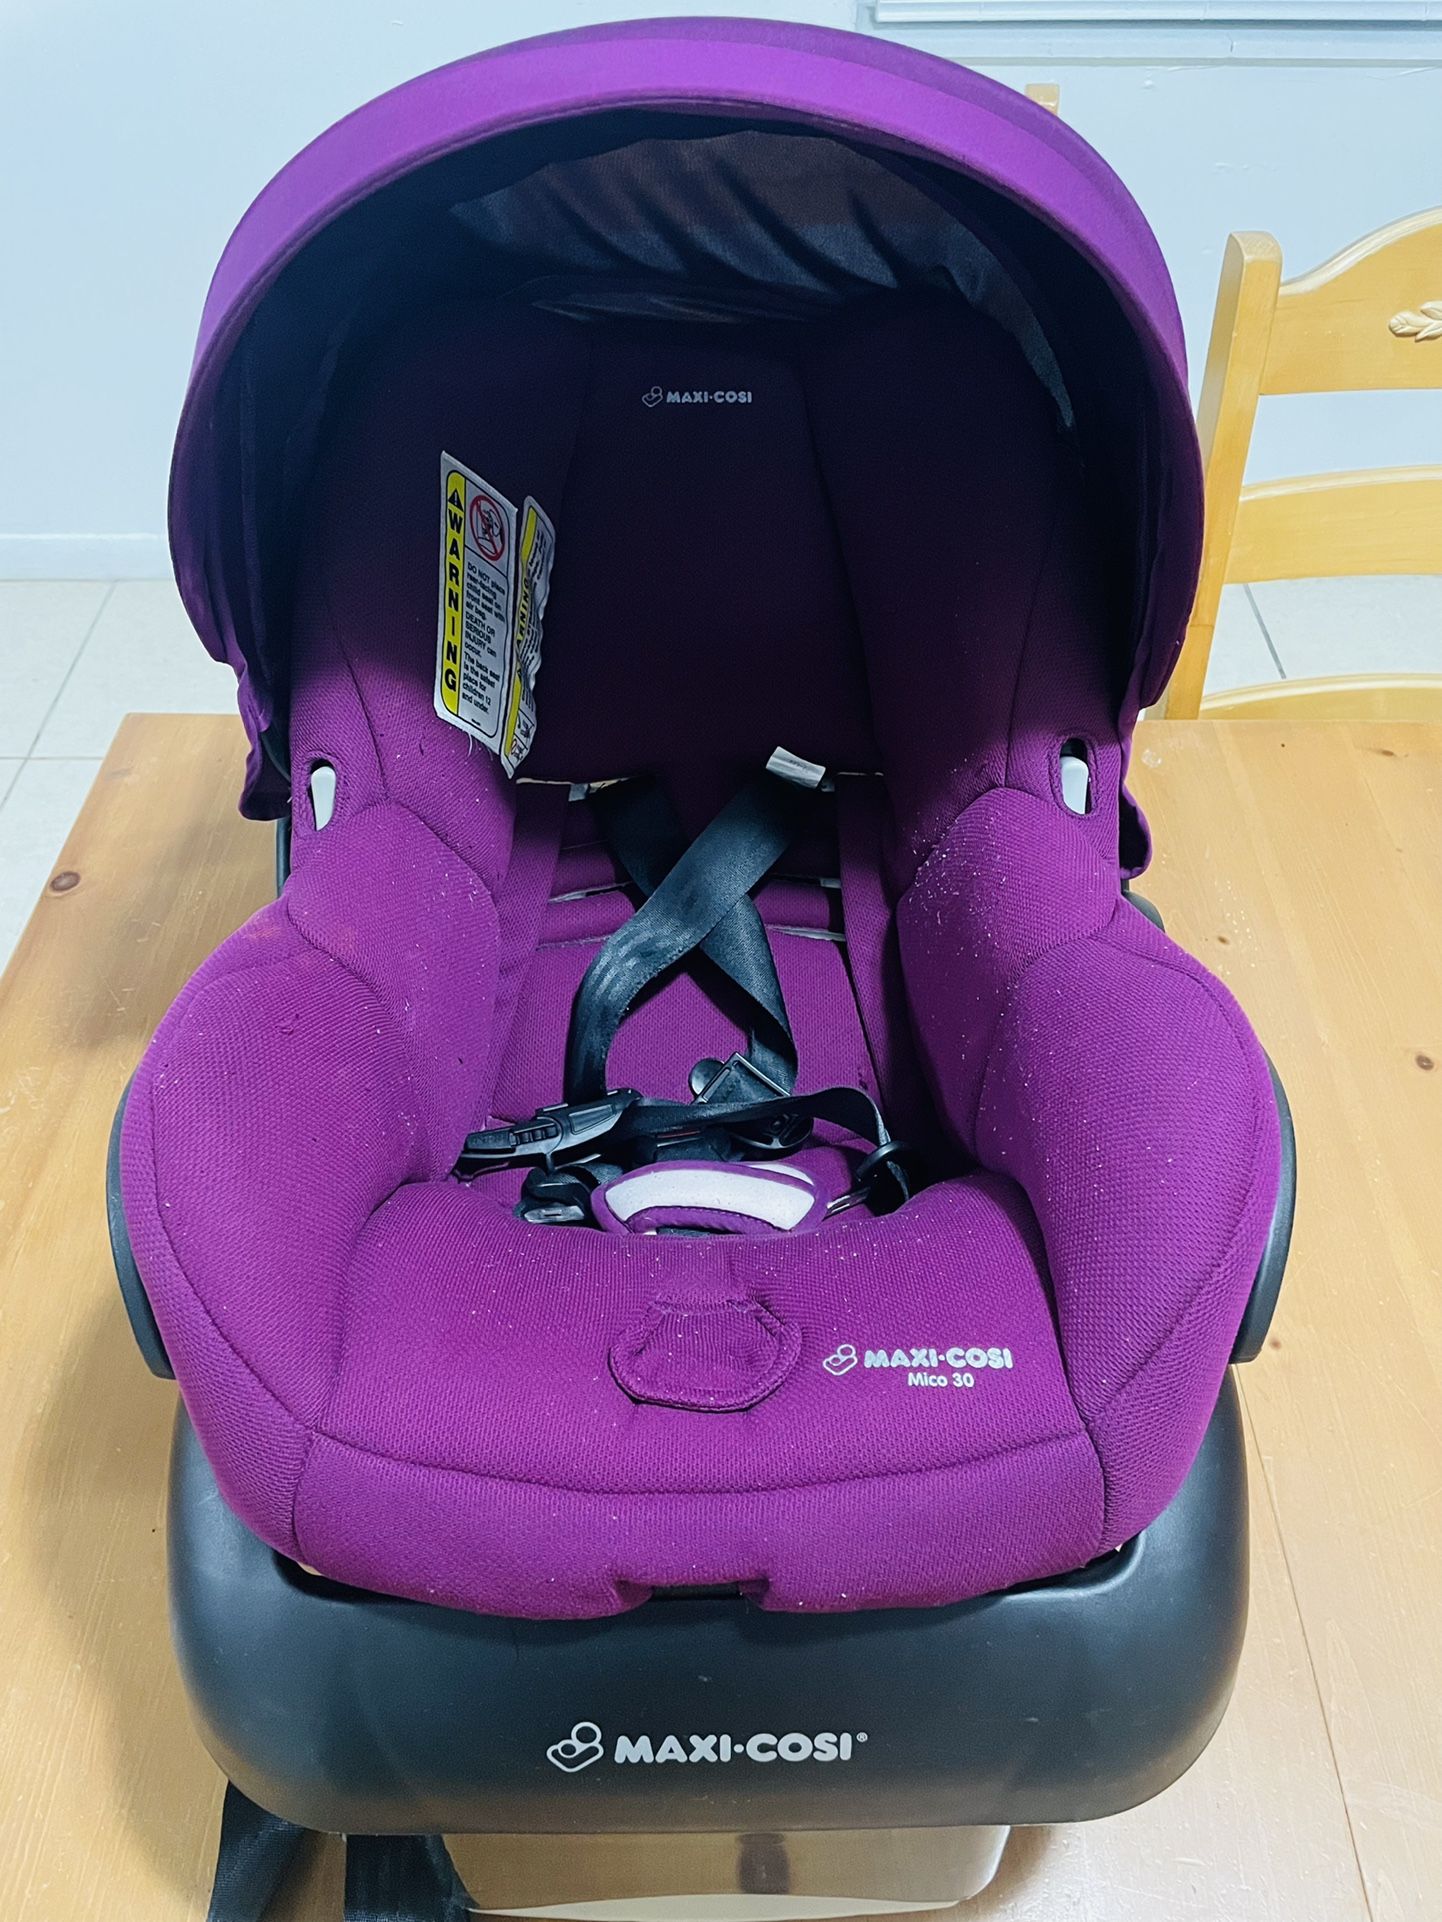 Maxi-Cosi Mico 30 Infant Car Seat in Purple 